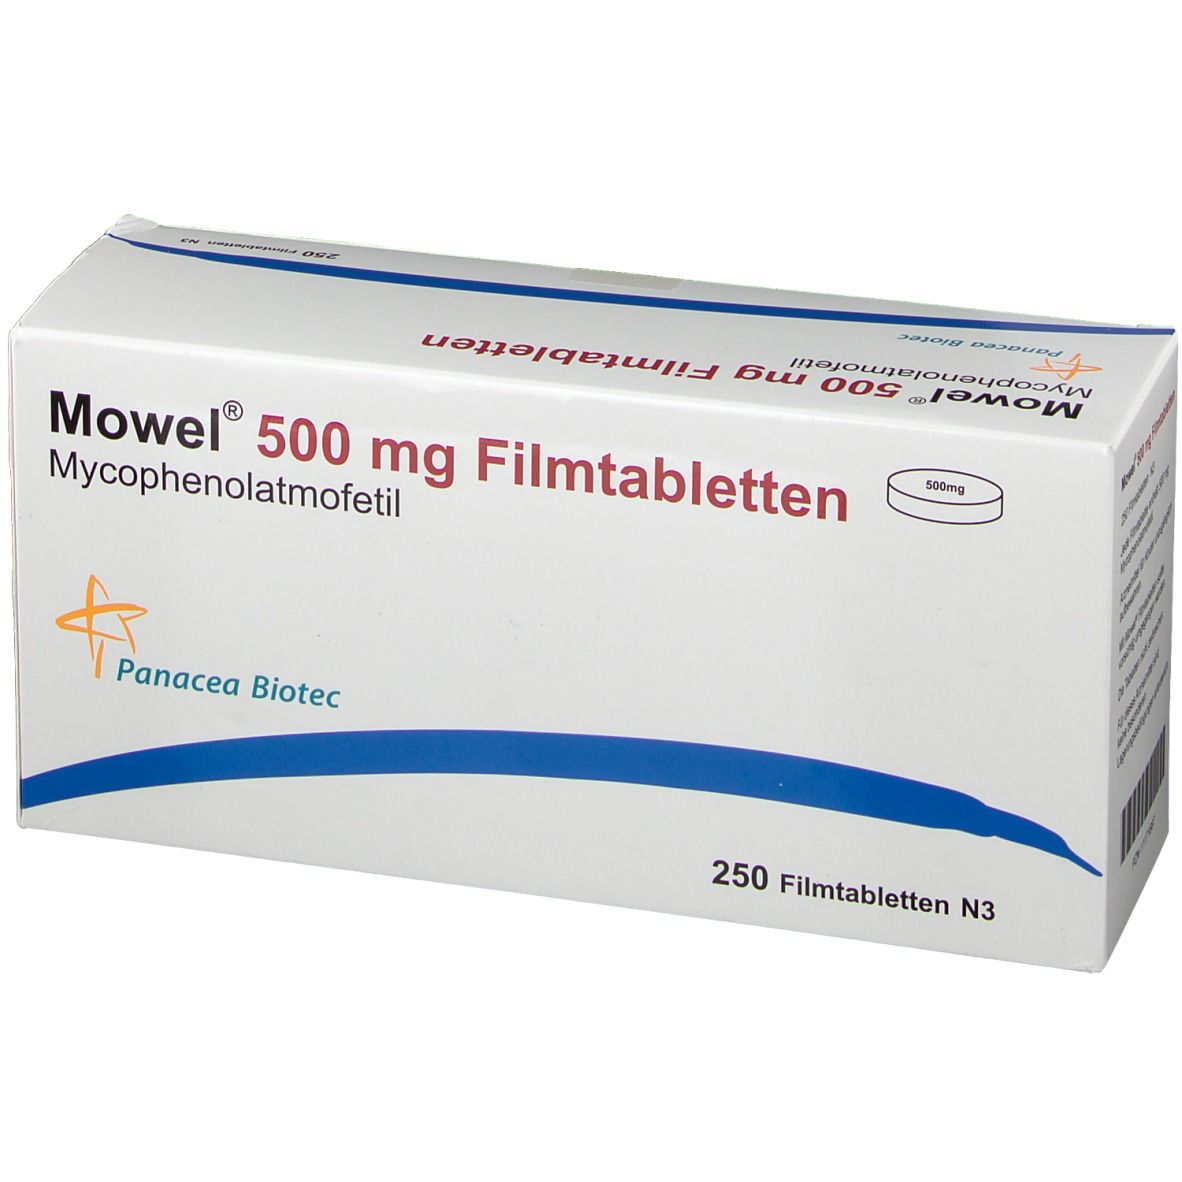 Mowel® 500 mg